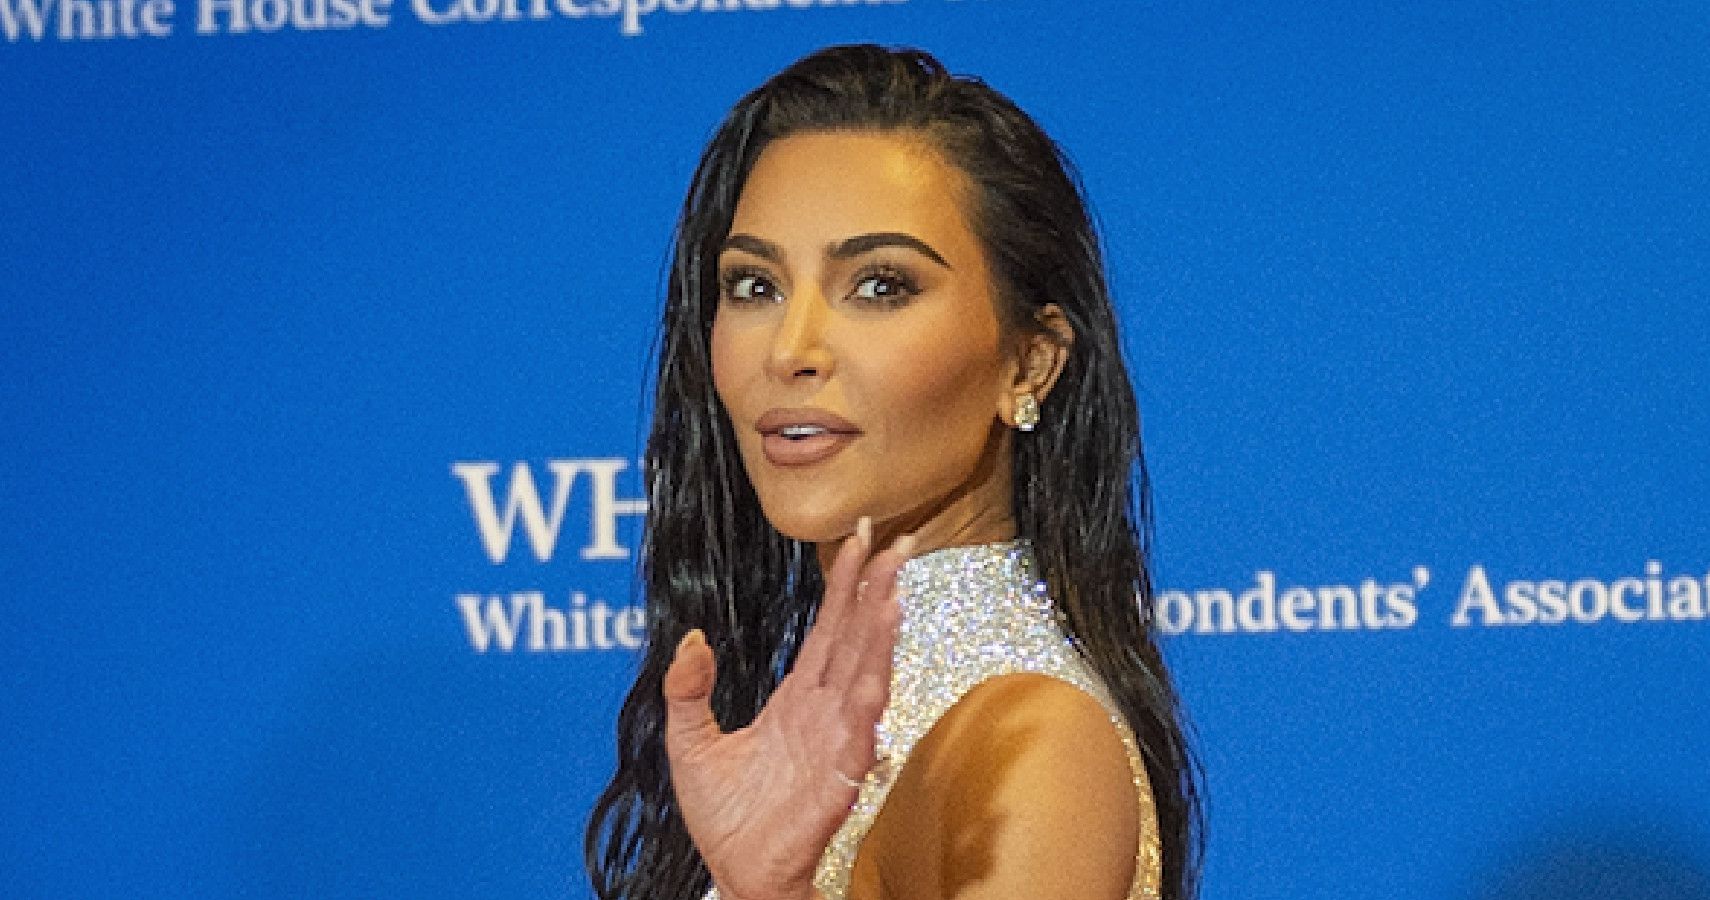 What happened to Kim Kardashian's music career?